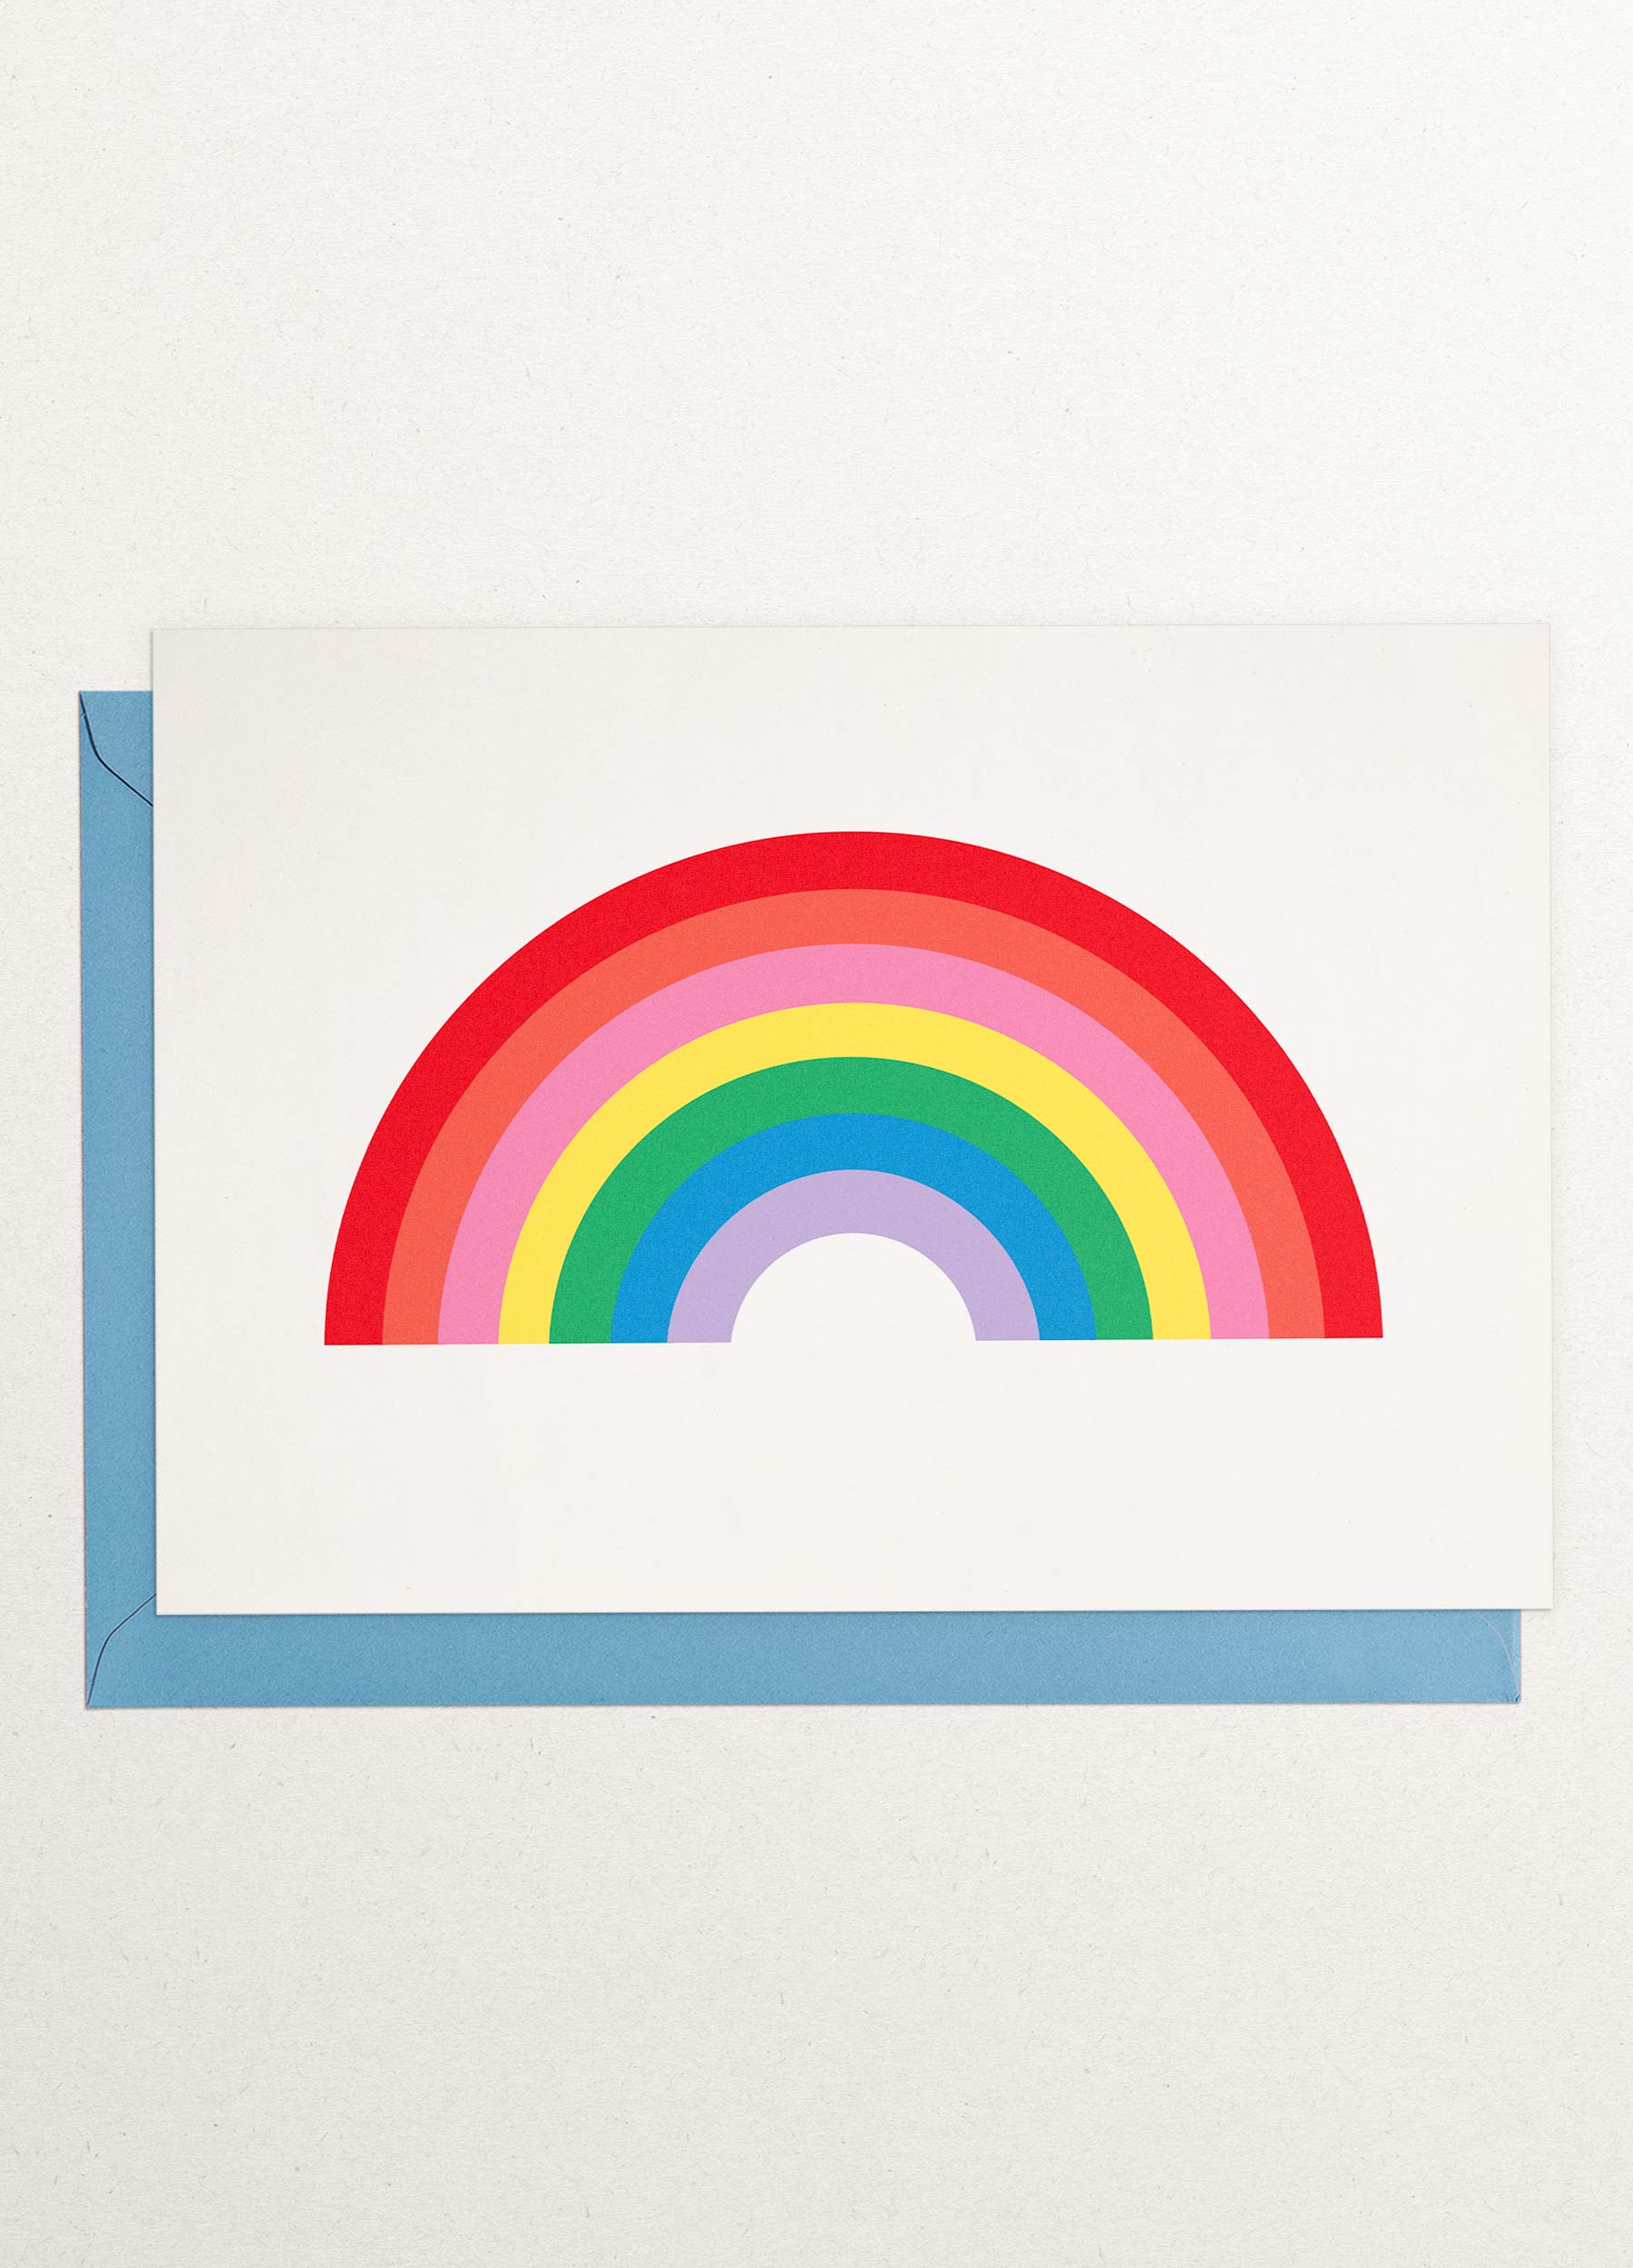 Rainbow Greeting Card